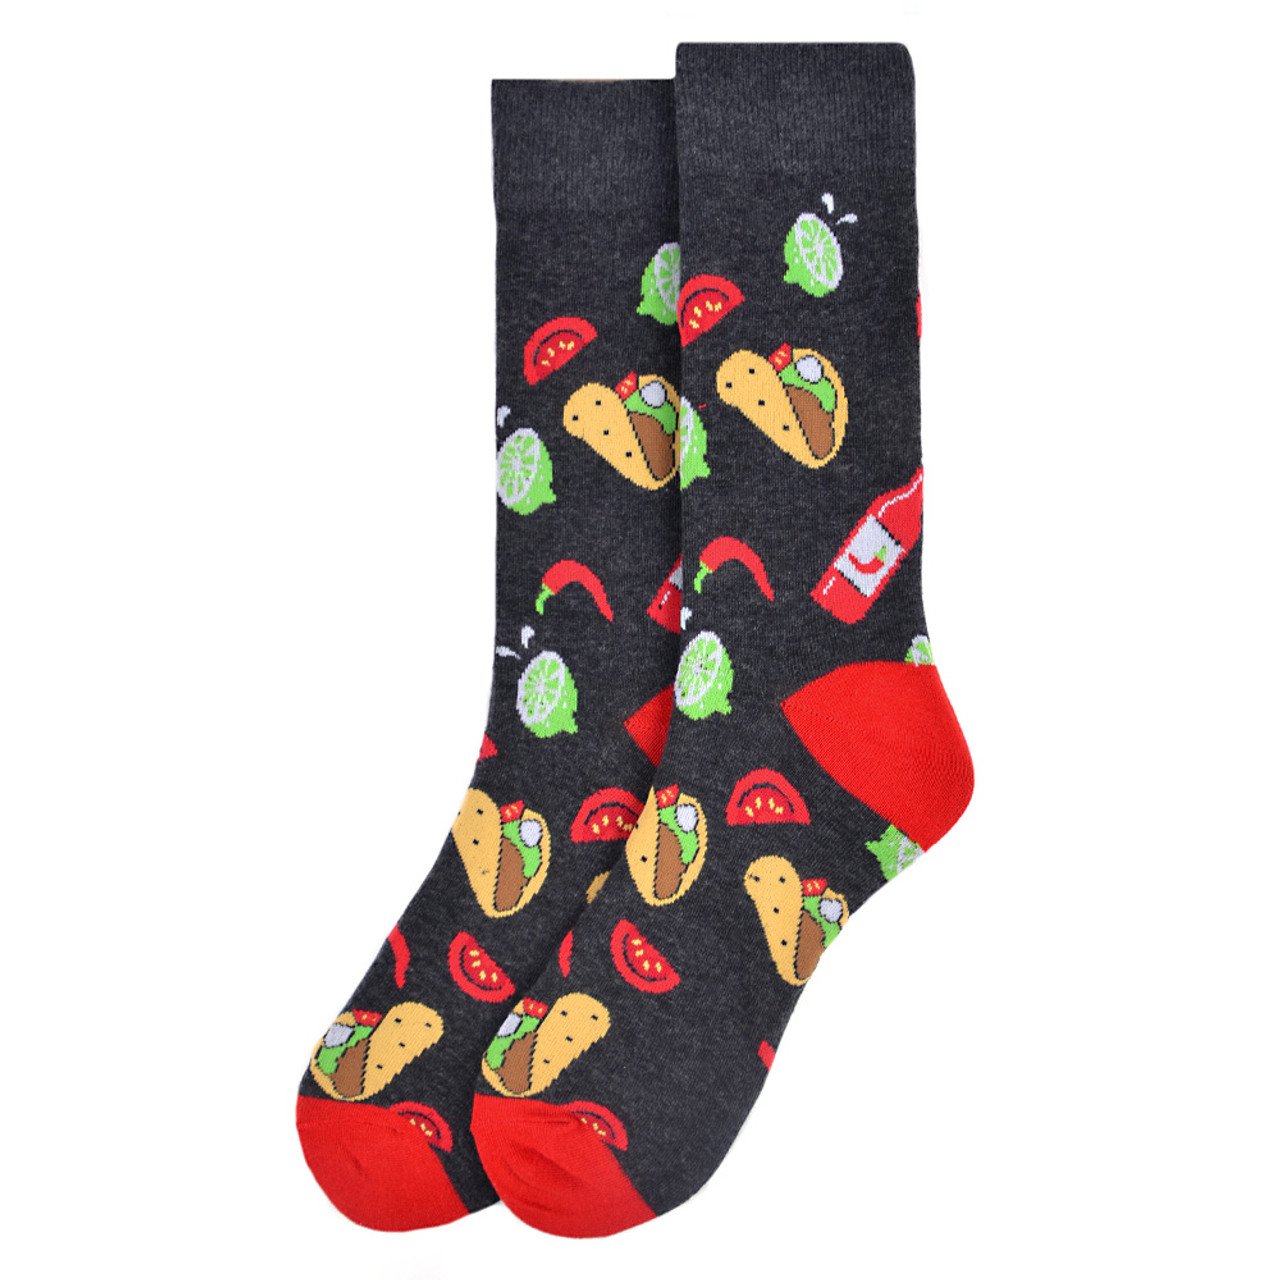 Parquet Taco Tuesday Socks Fun Novelty Socks Crazy Fun Mexican Food Crew Socks Groomsmen Wedding Socks